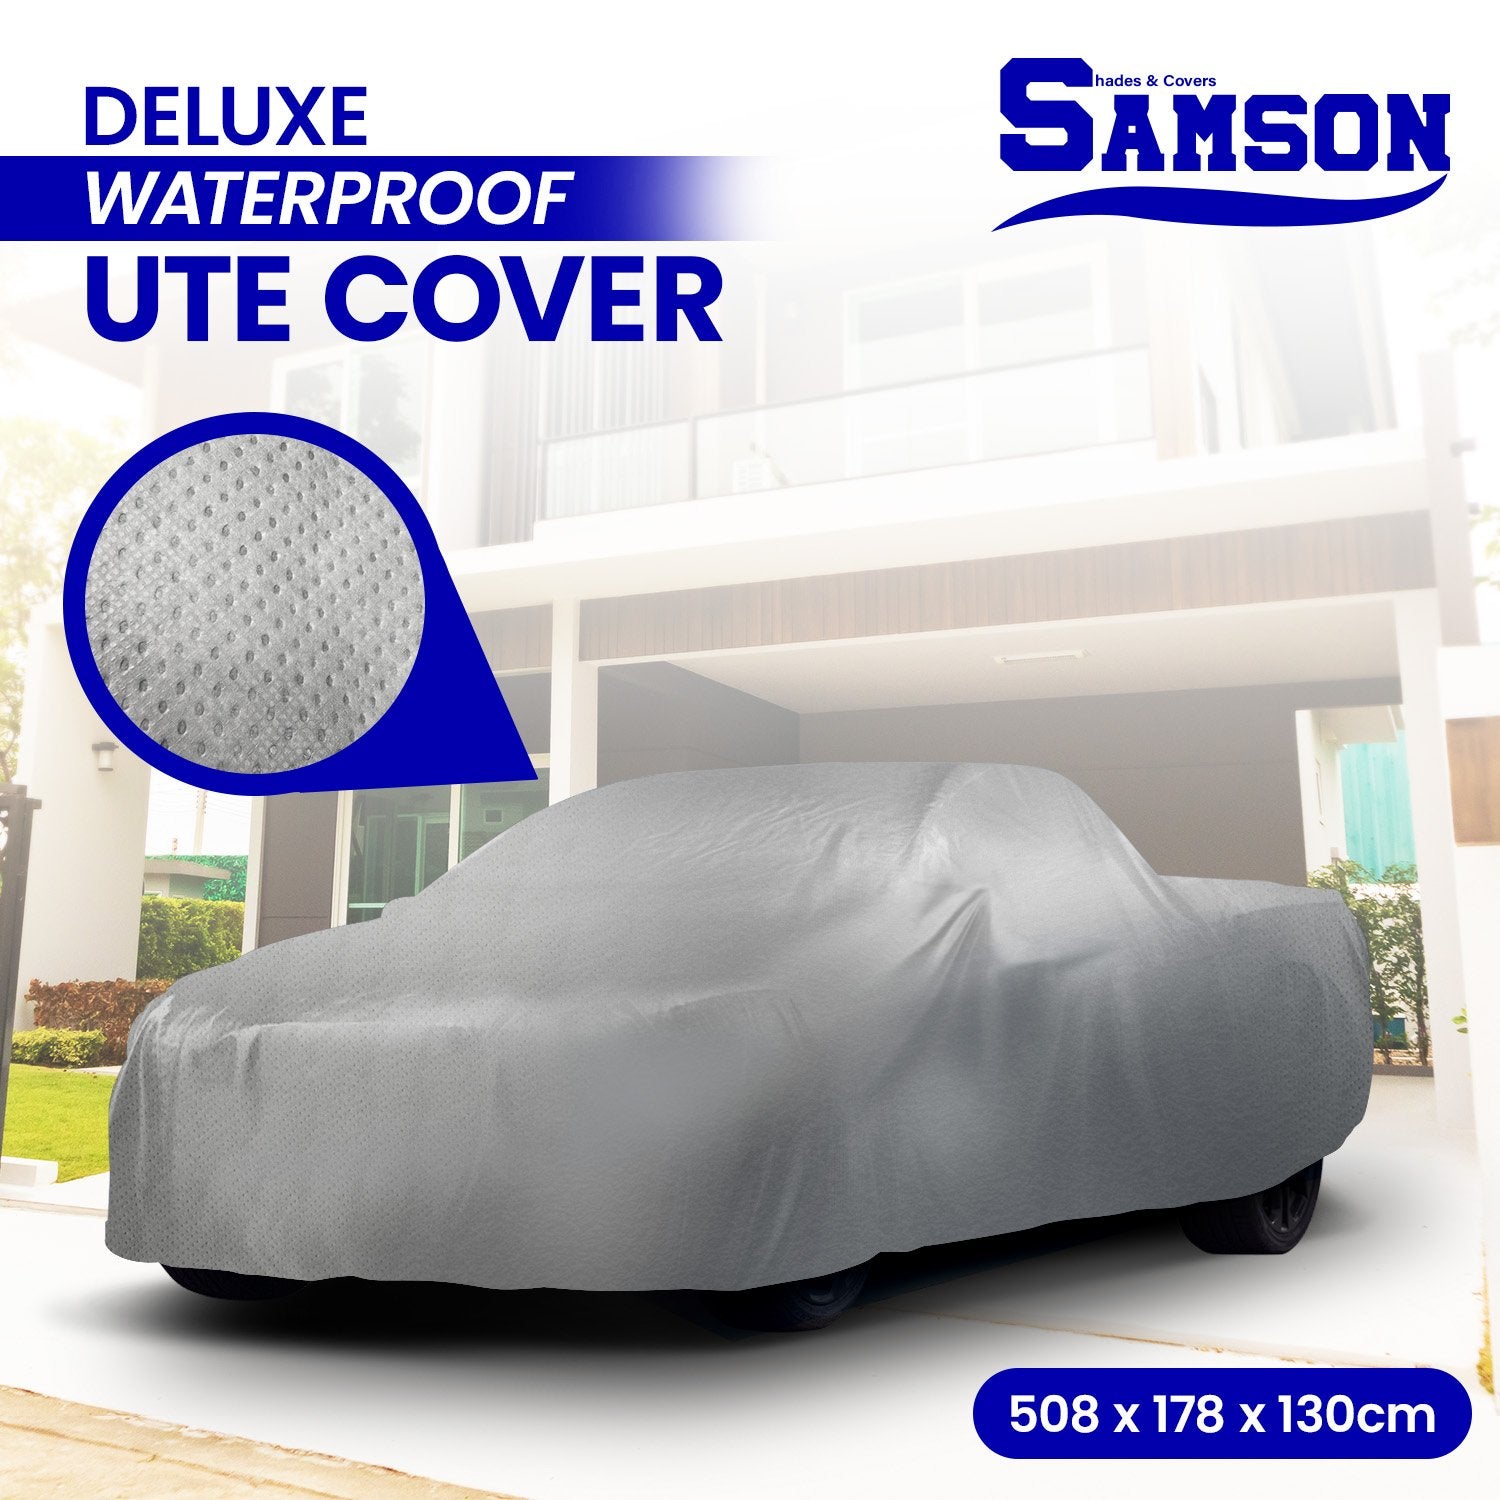 Samson Deluxe Waterproof Ute Cover